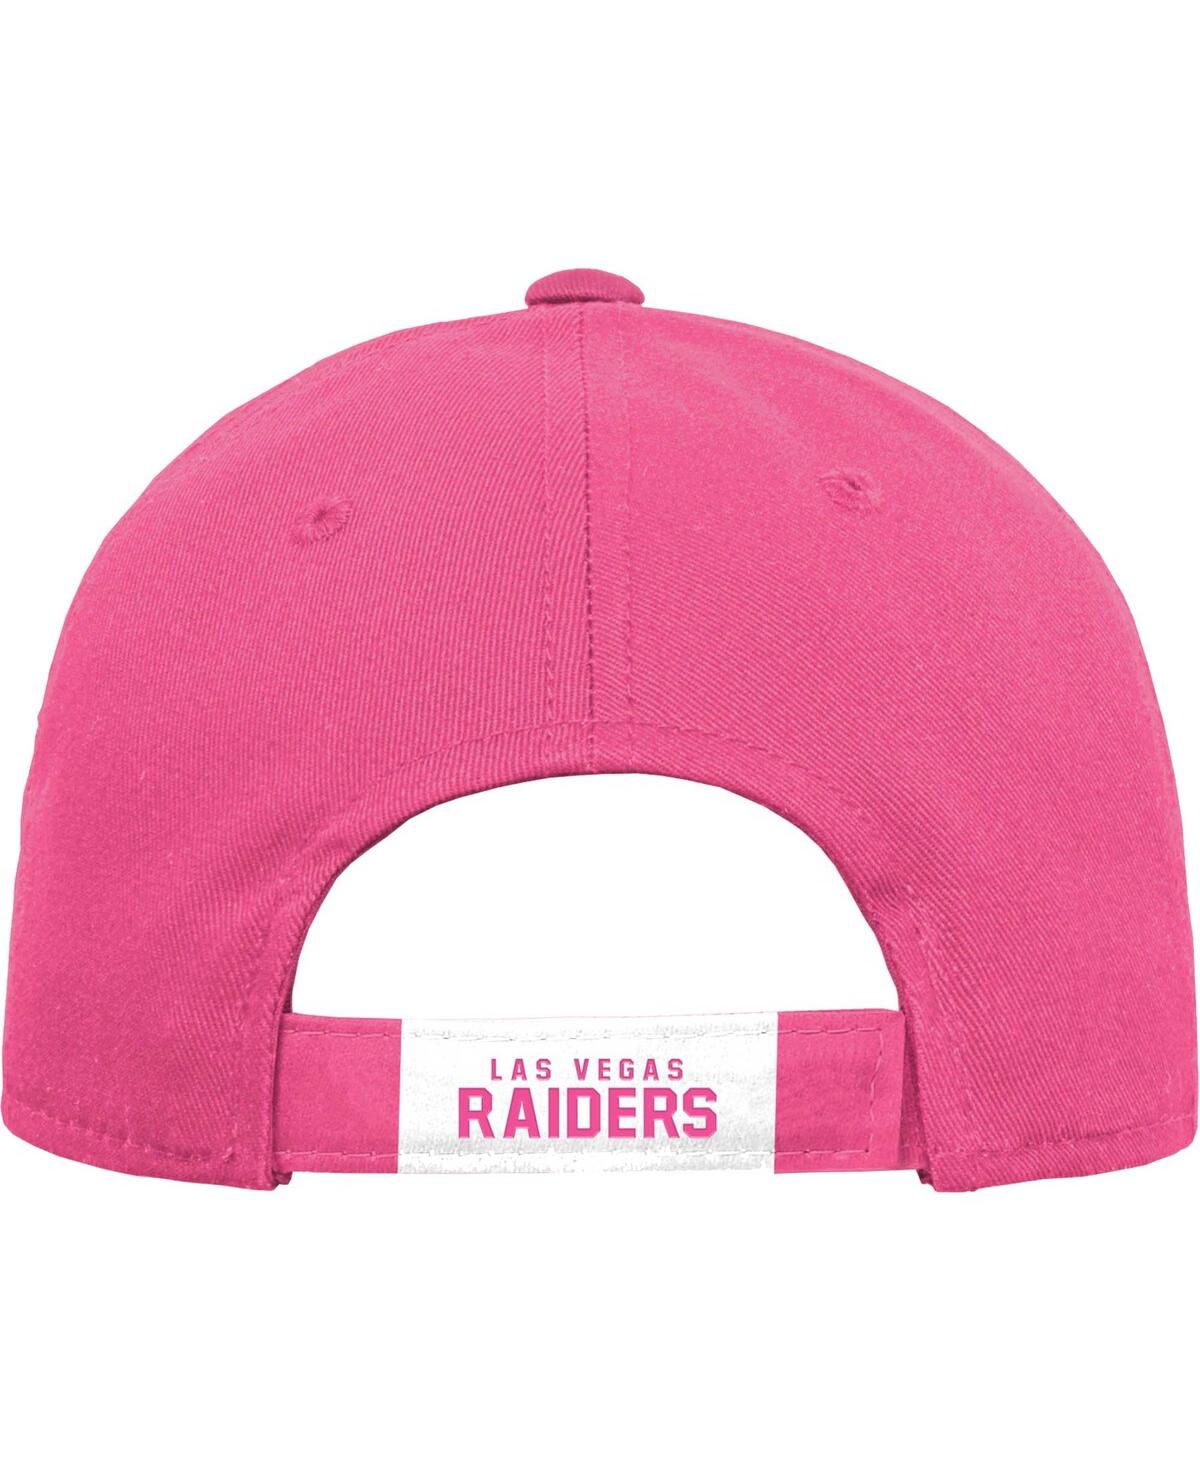 Shop Outerstuff Girls Youth Pink Las Vegas Raiders Adjustable Hat